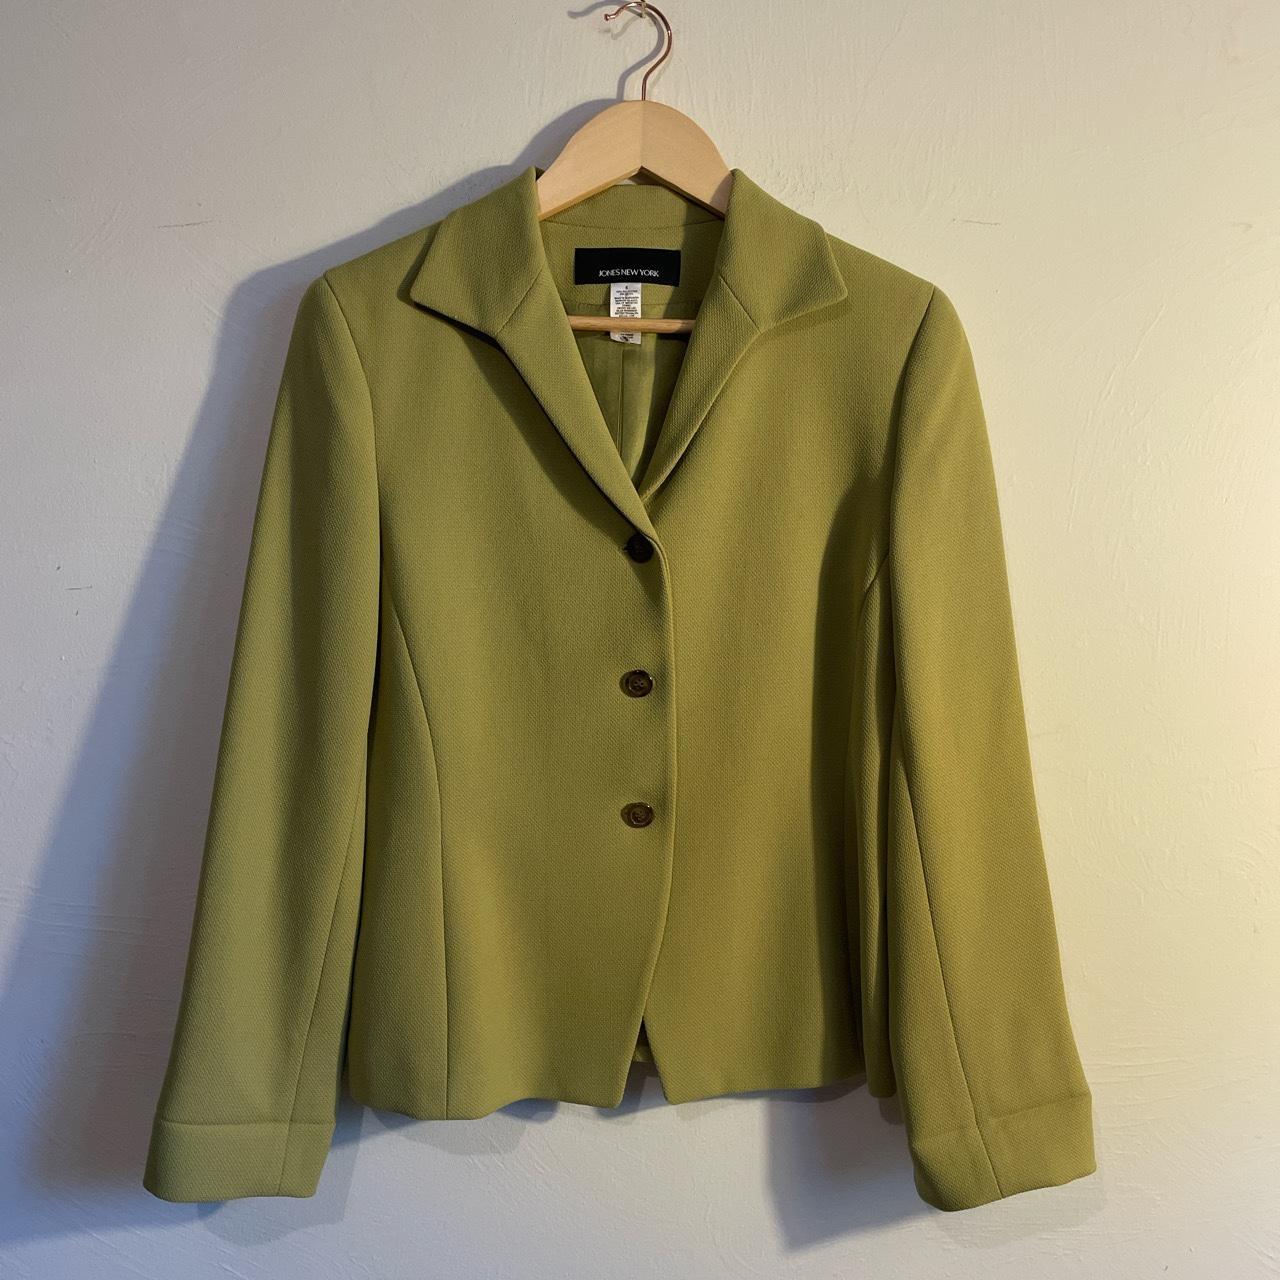 Jones New York Women's Green and Khaki Jacket | Depop